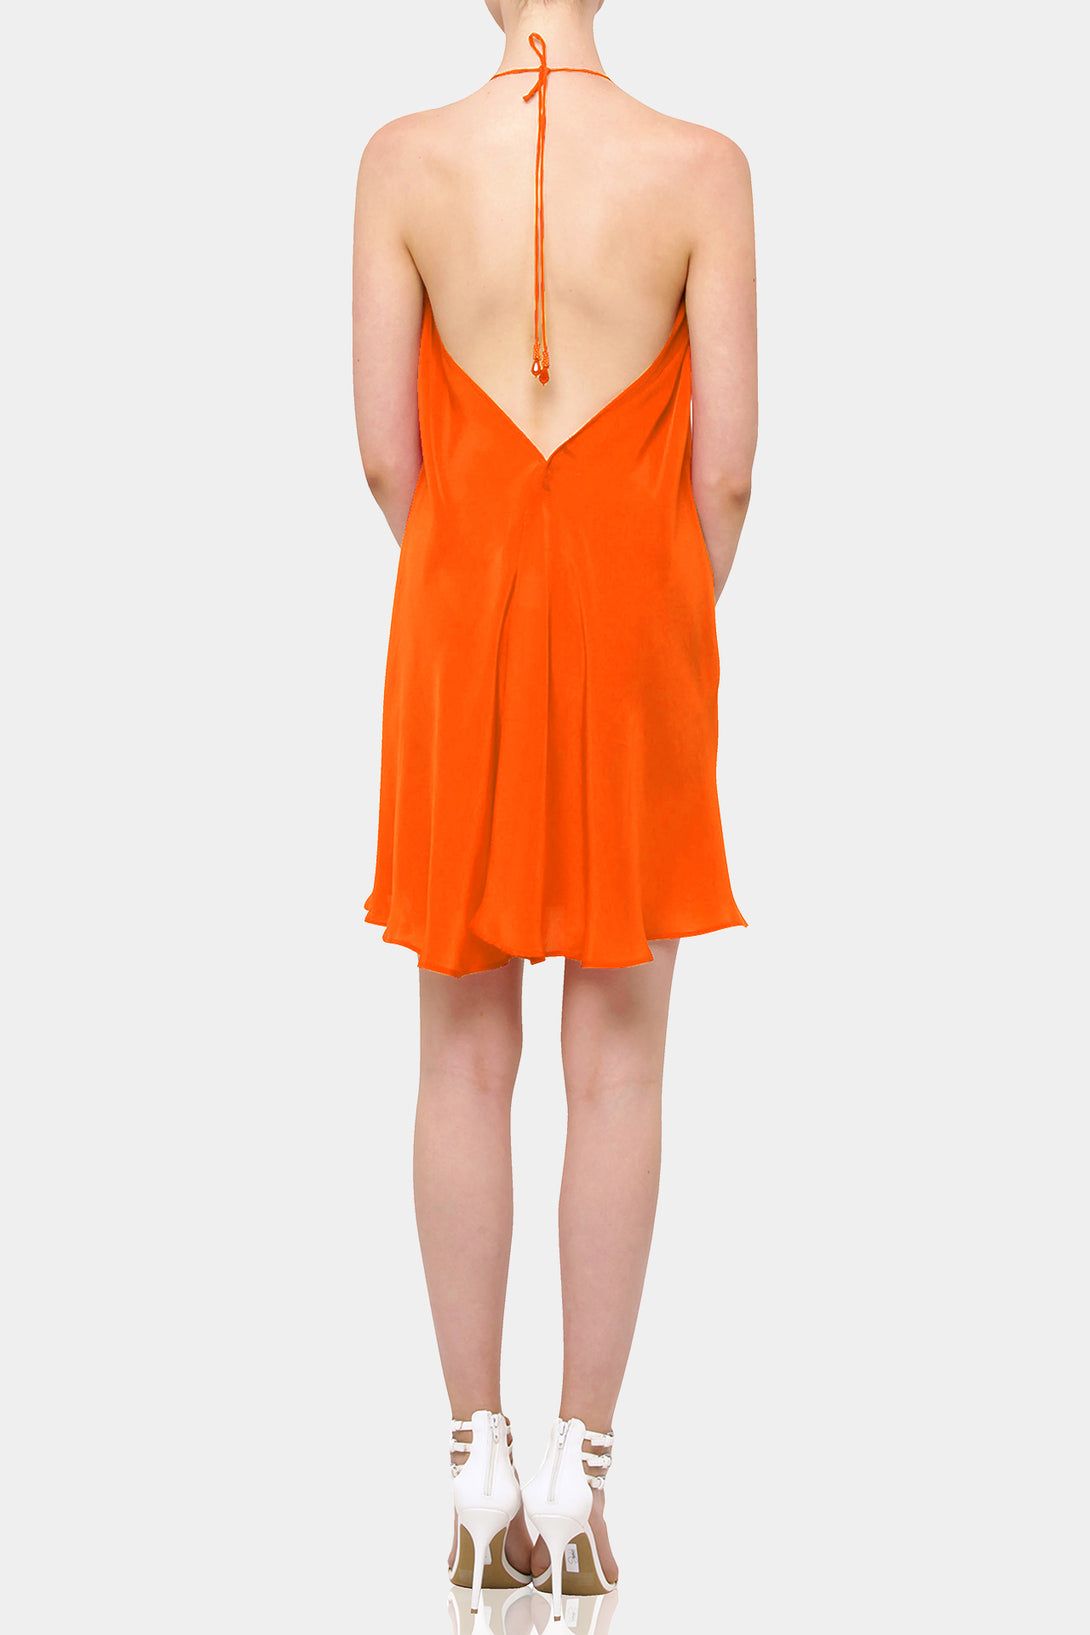  orange mini dress, Shahida Parides, sexy mini dresses for women, sleeveless mini dress,